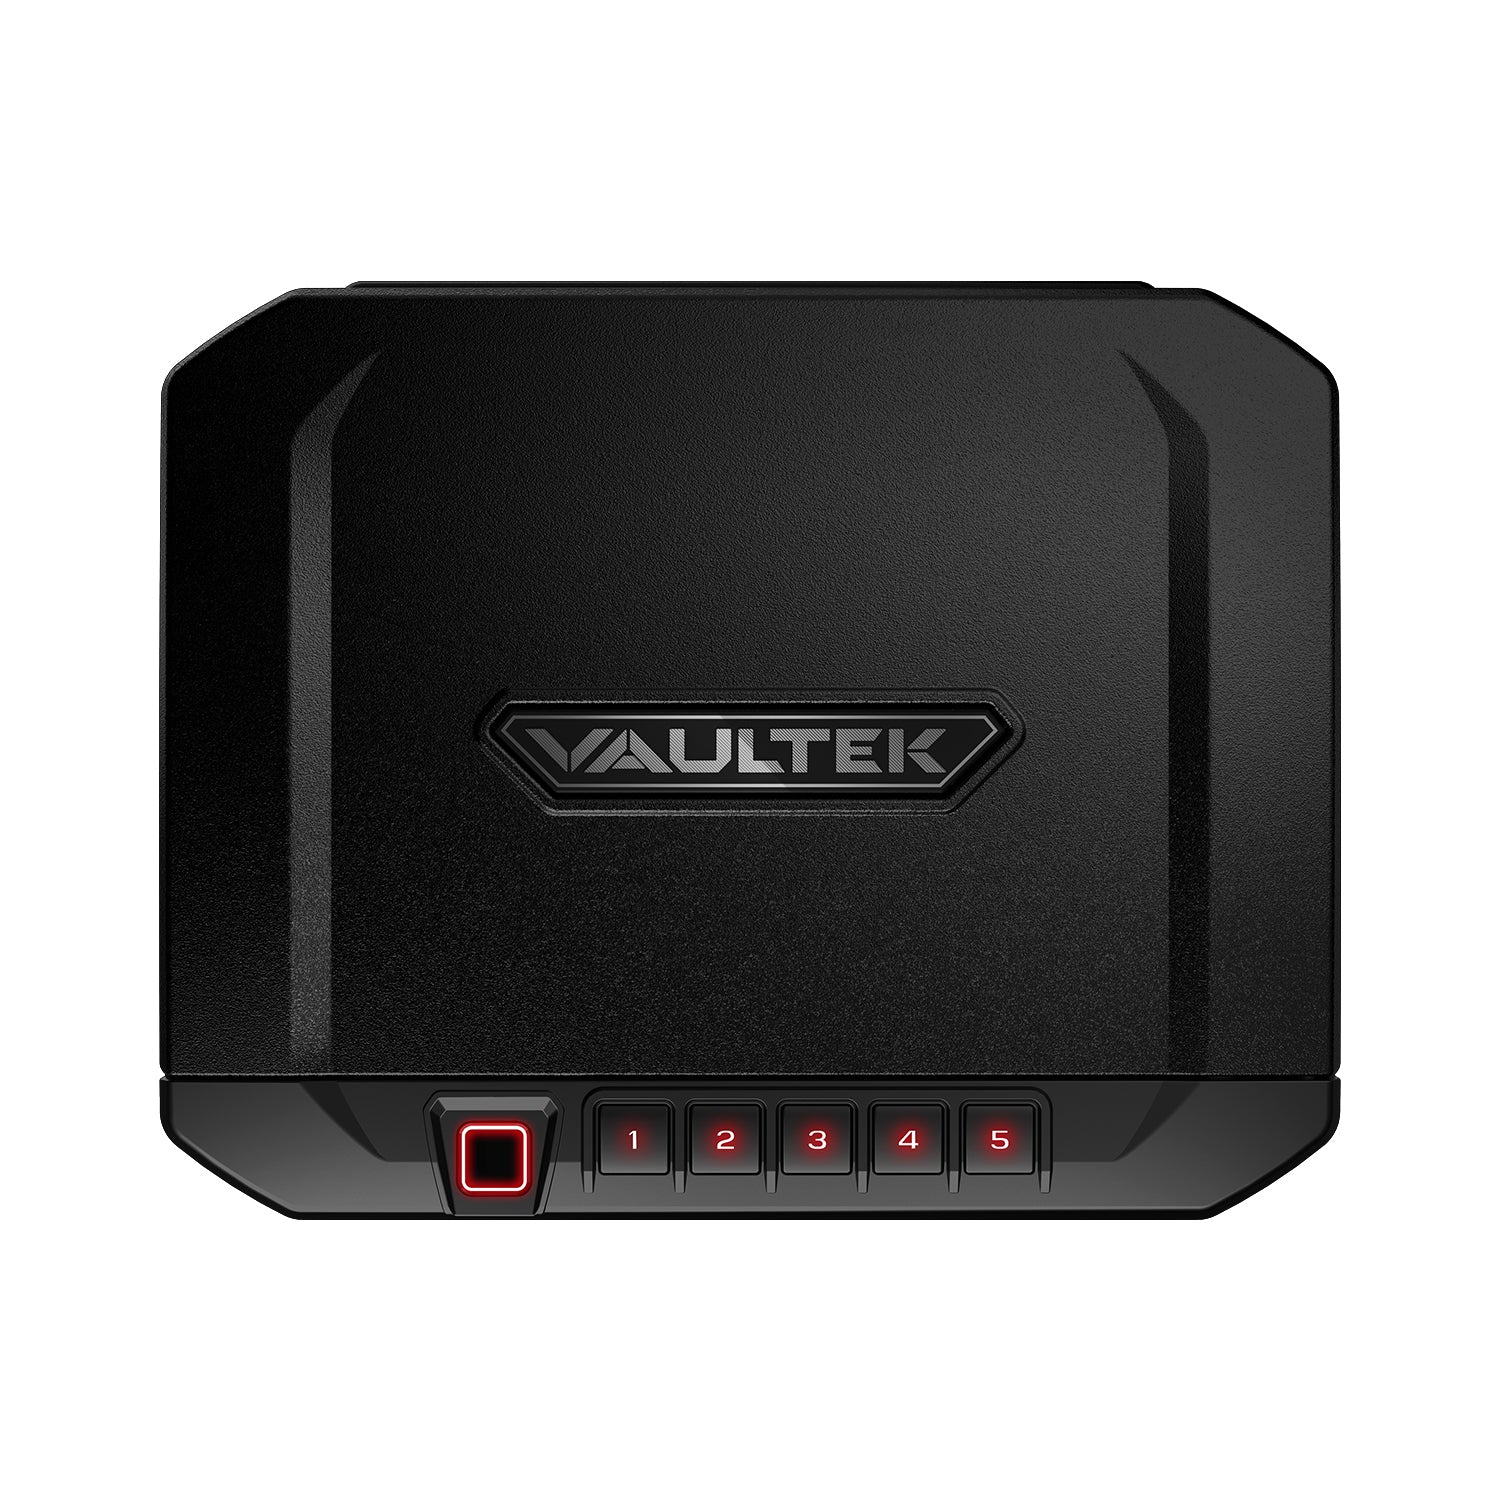 Vaultek VS10i Compact Biometric Bluetooth Smart Safe